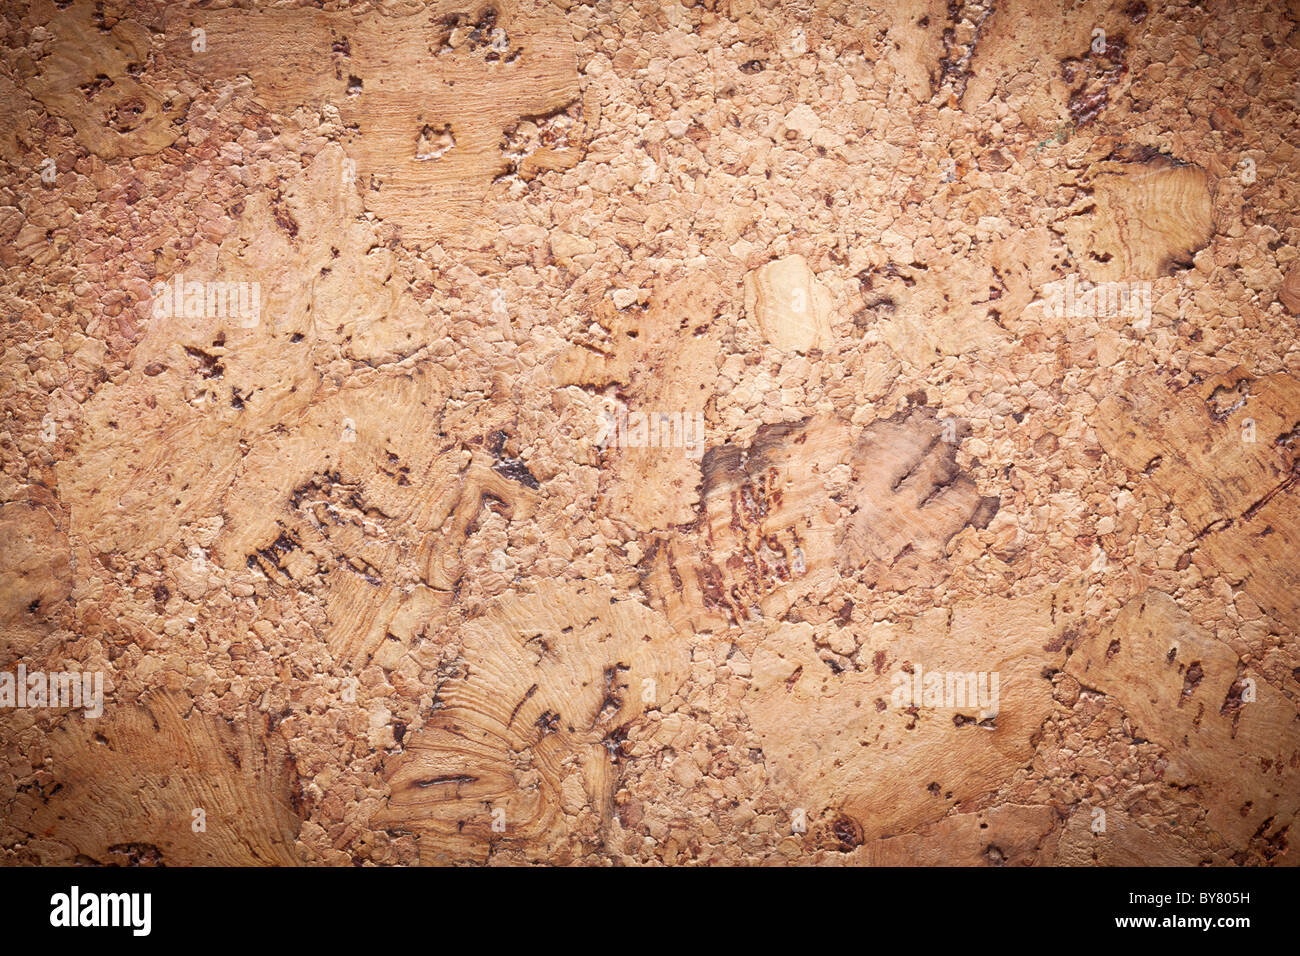 Image texture cork - wood surface. Stock Photo